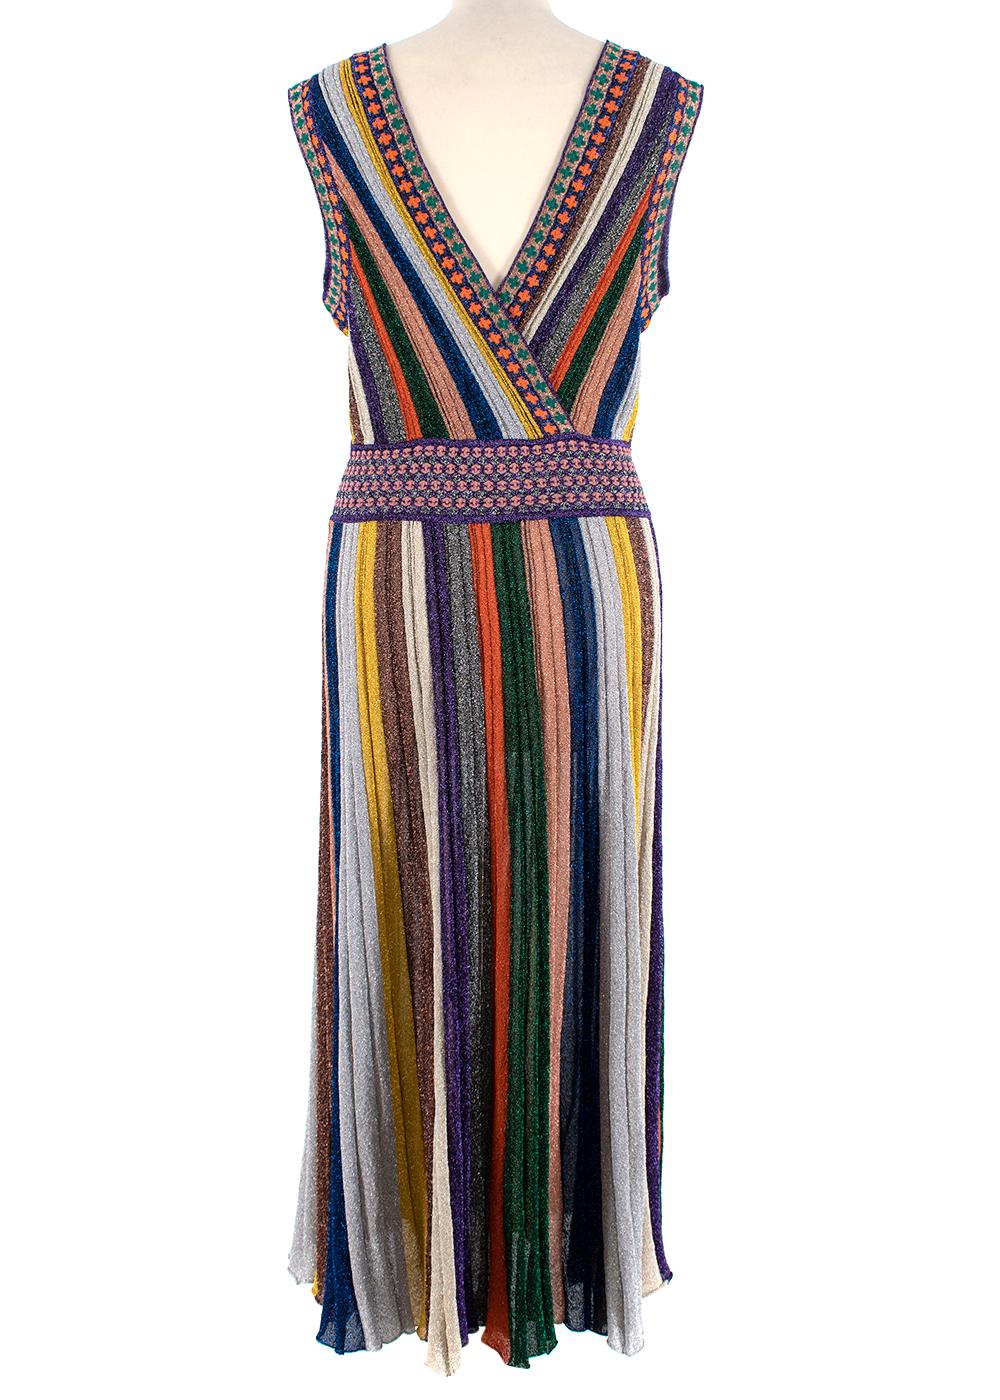 Black Missoni Metallic Knit Striped Sleeveless Dress - Us size 8 